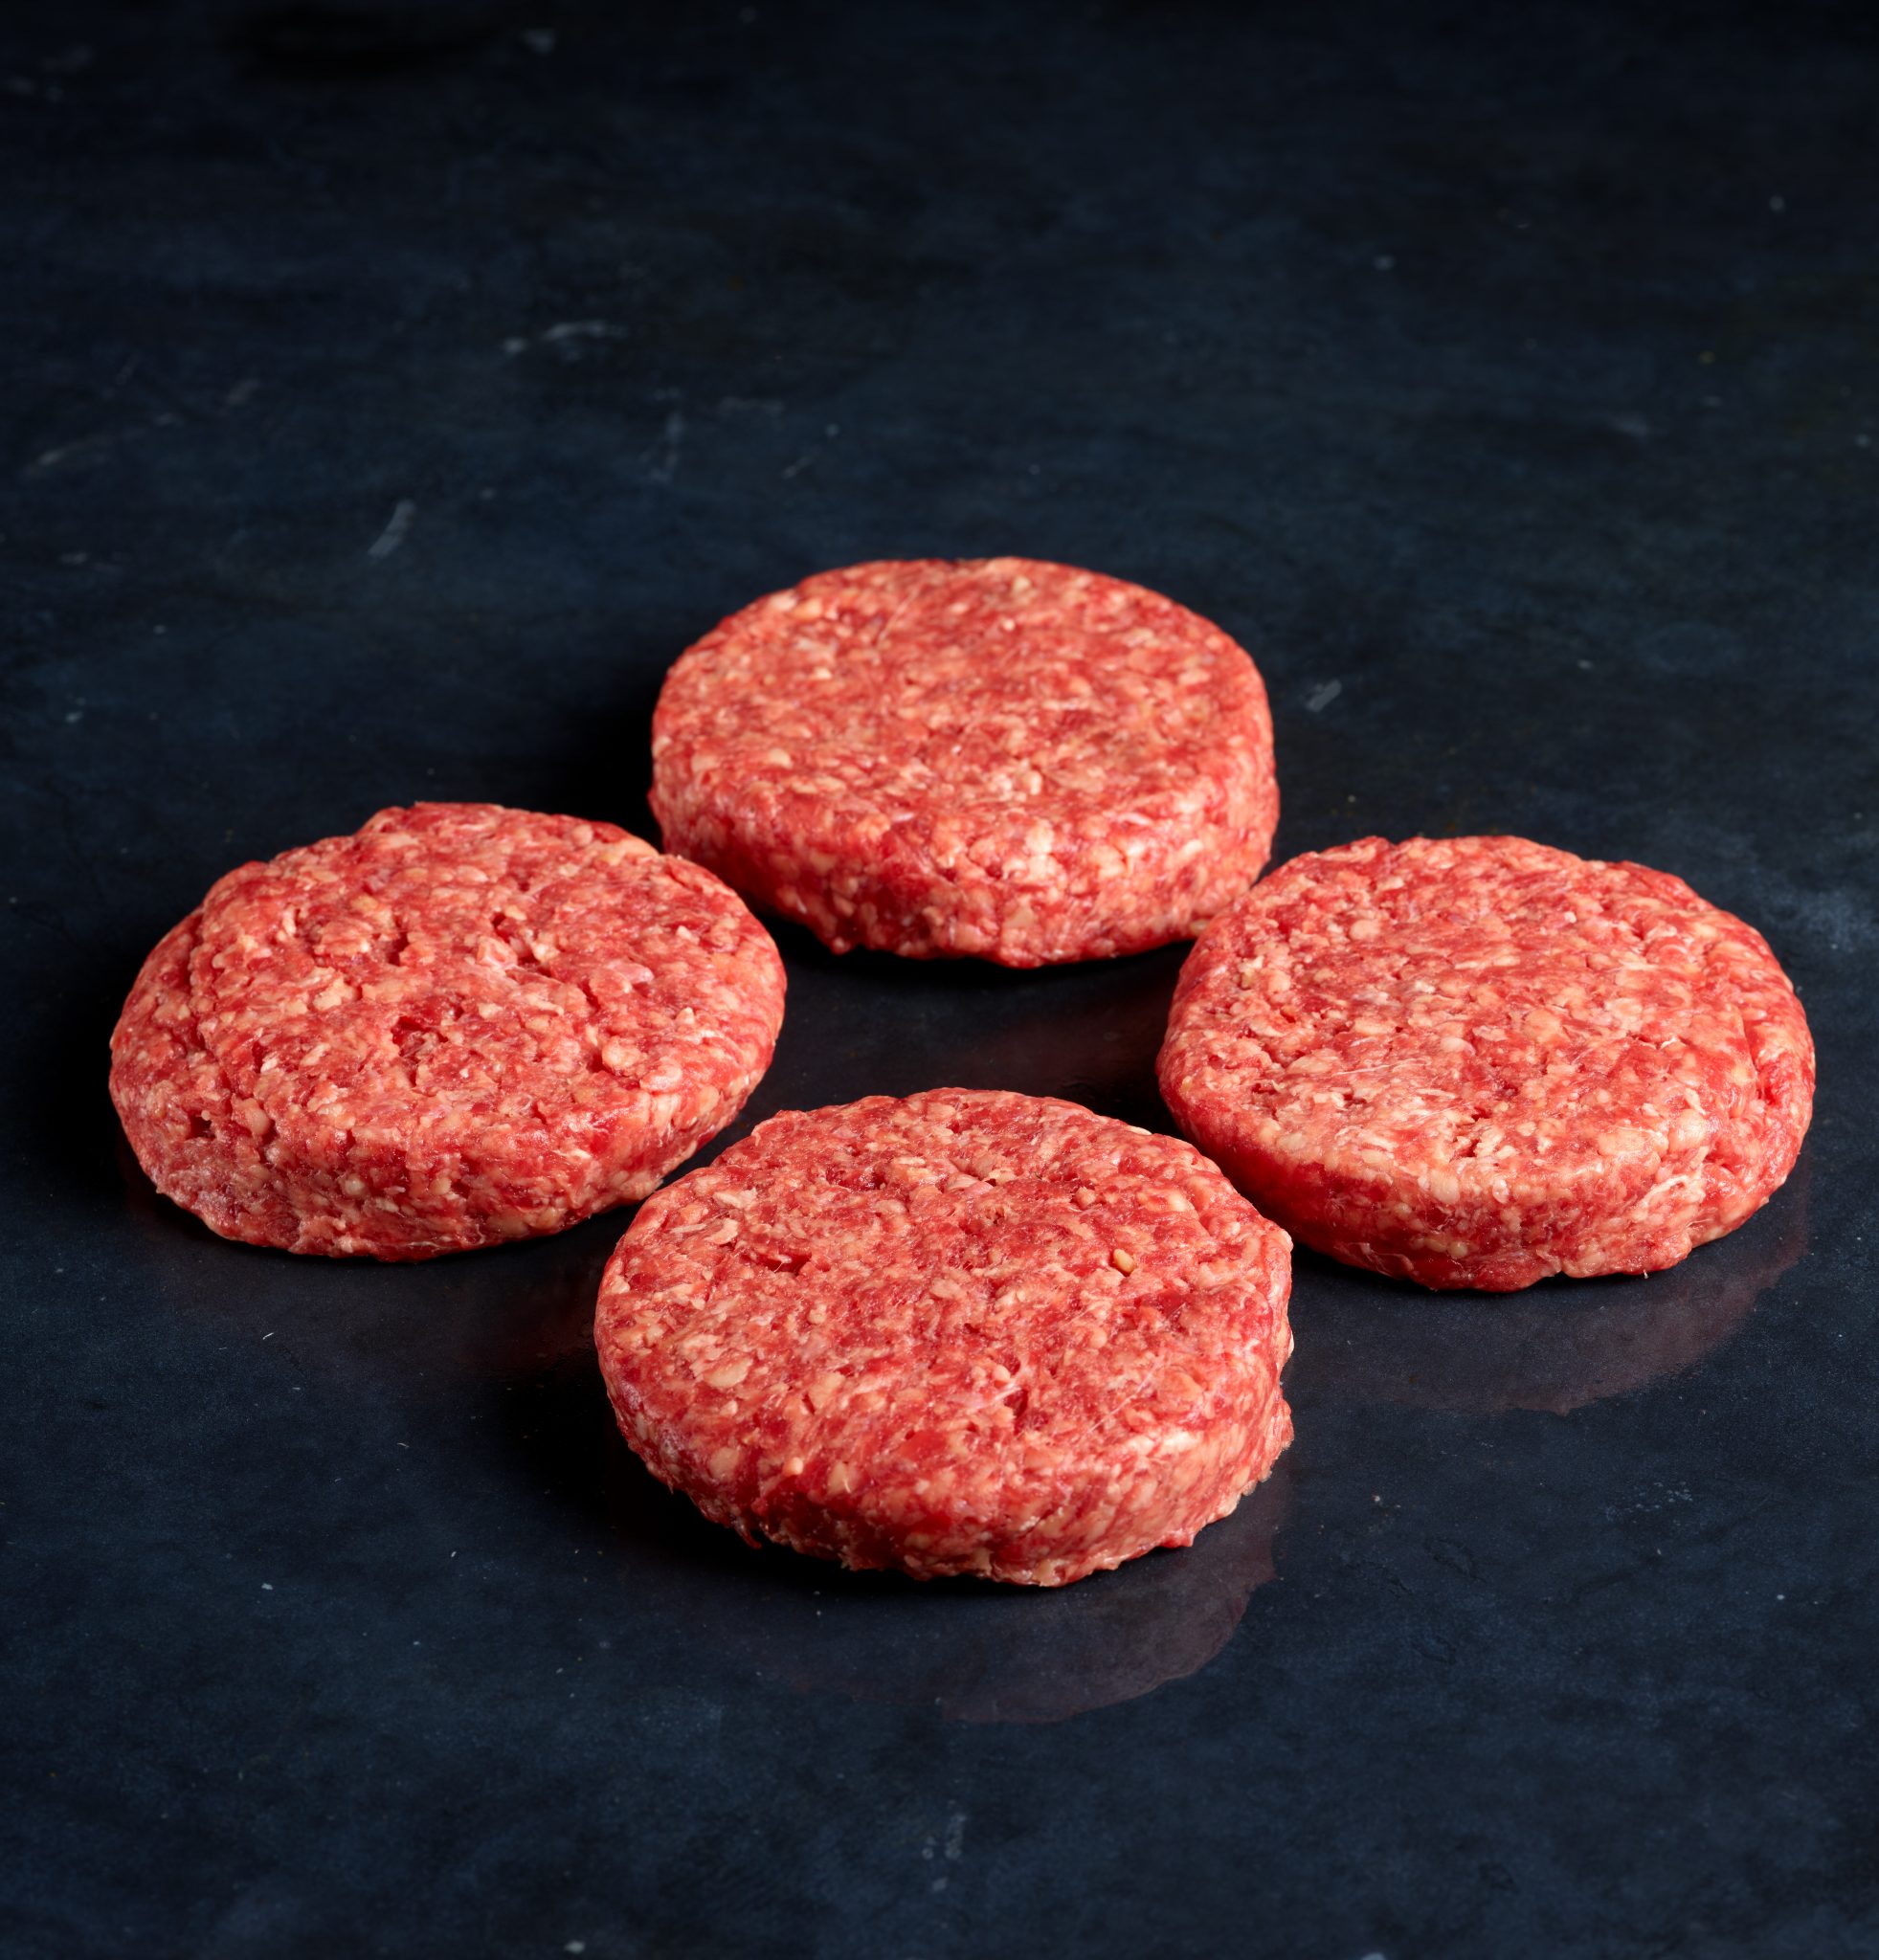 Gourmet Beef Burger 113g - IMS of Smithfield - Buy Online Now